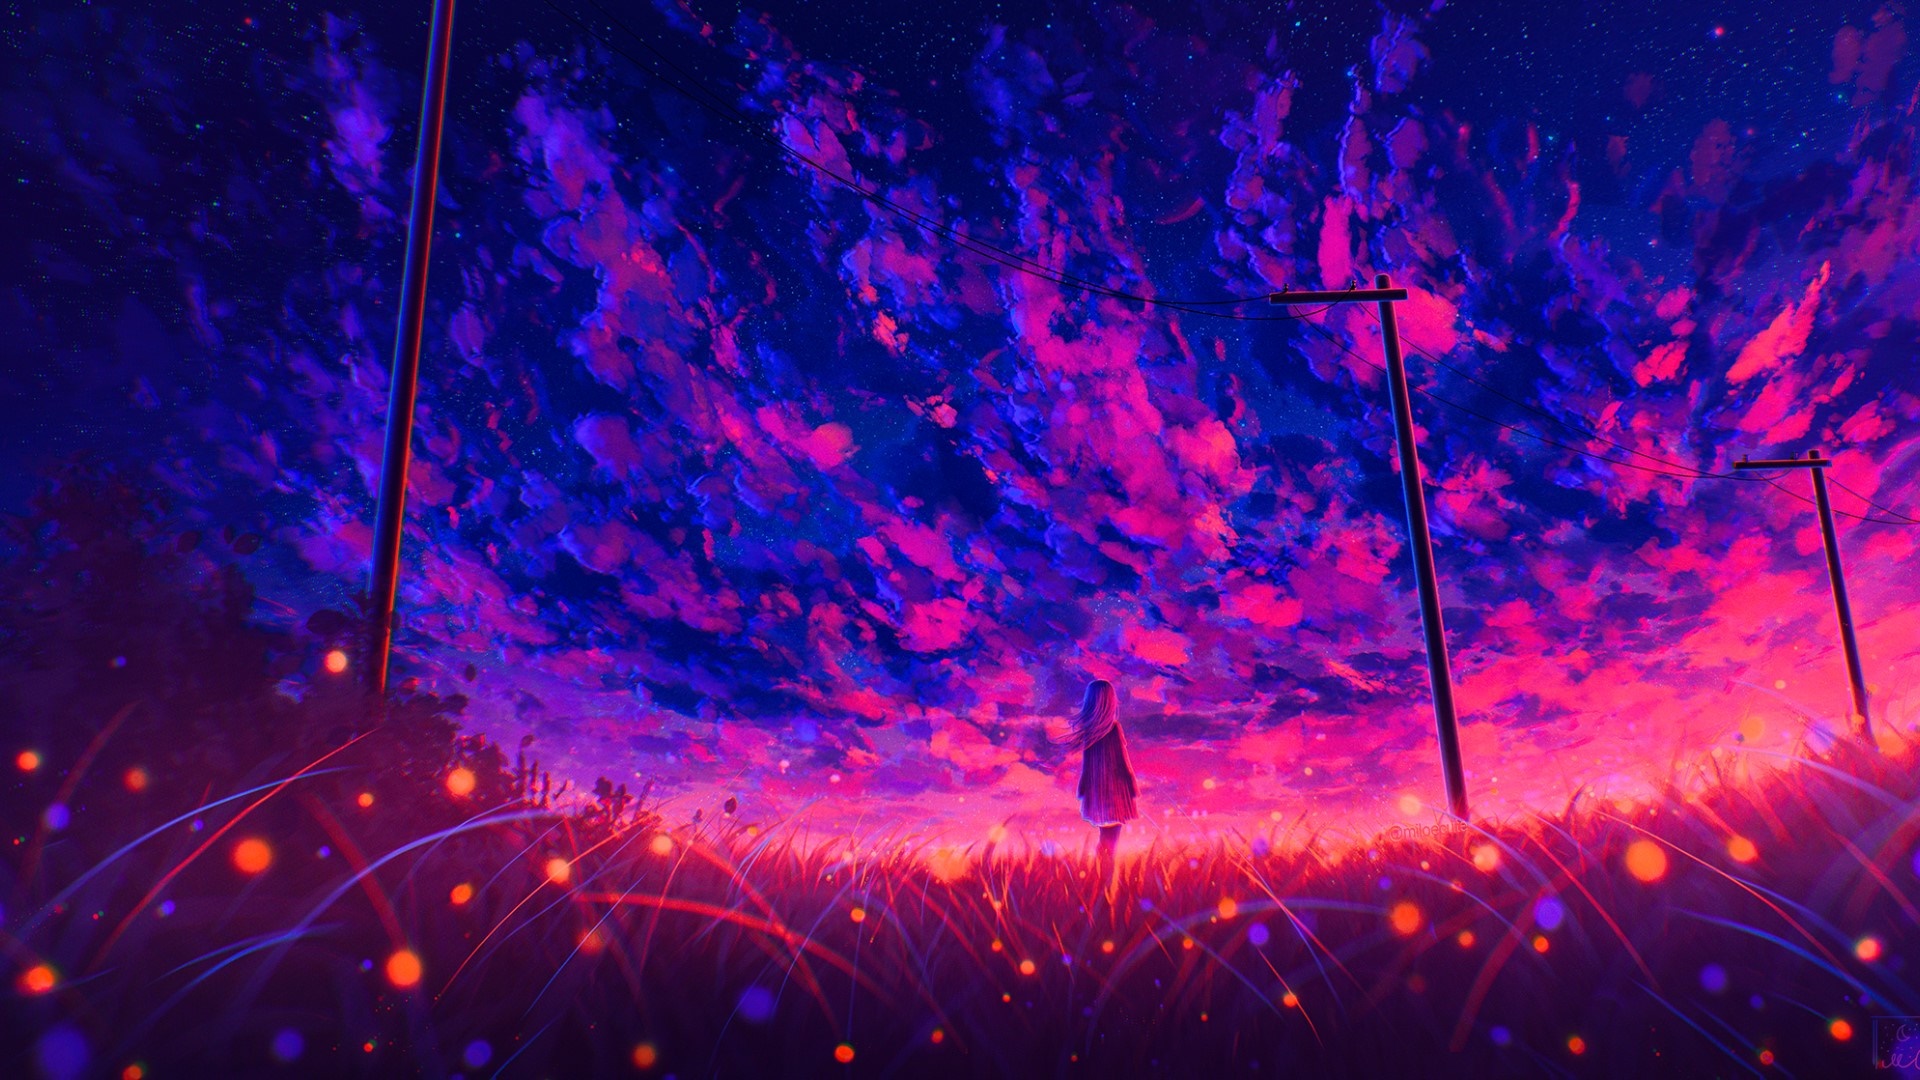 Anime 1920x1080 Elizabeth Miloecute grass sunset women outdoors sky clouds